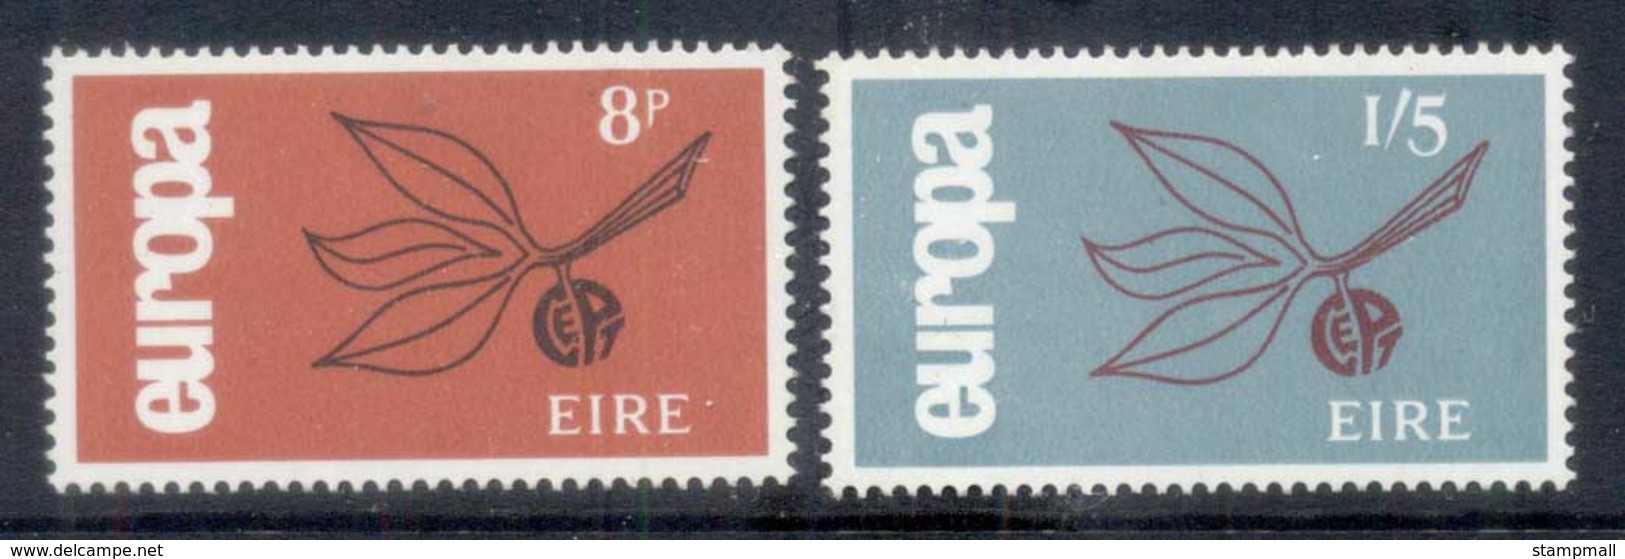 Ireland 1965 Europa MUH - Used Stamps